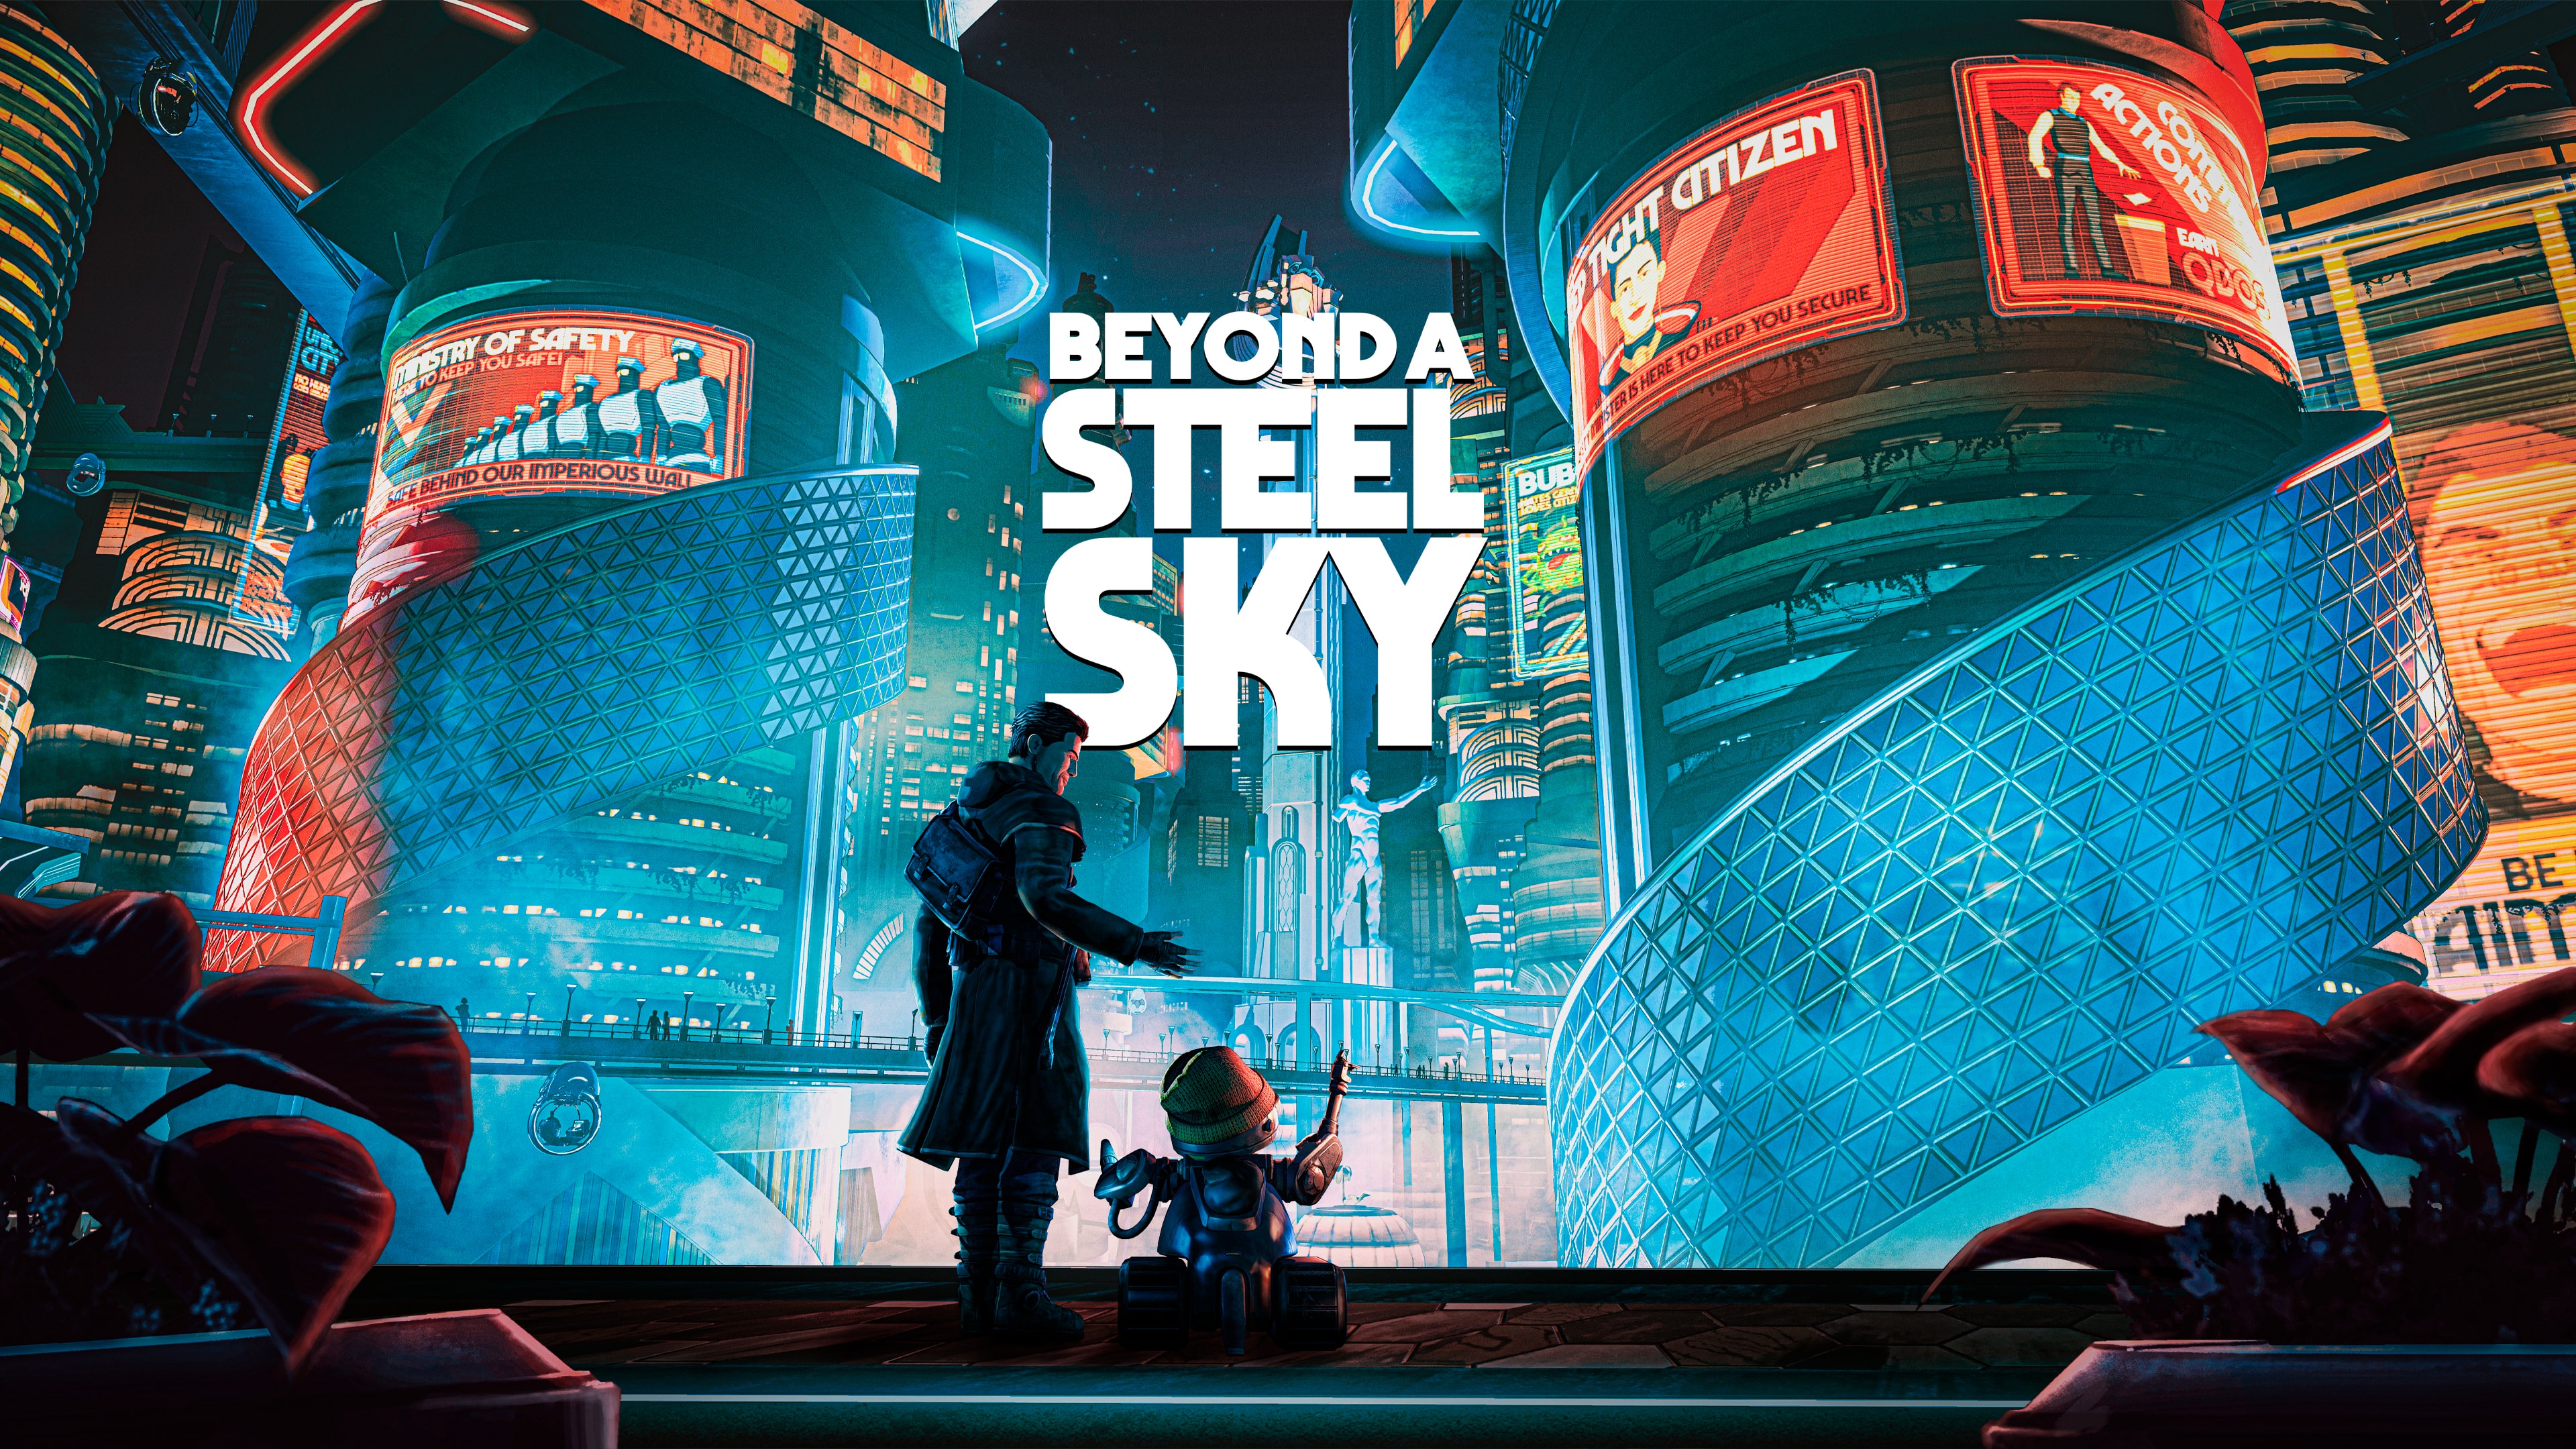 Beyond a Steel Sky (중국어(간체자), 한국어, 영어, 일본어, 중국어(번체자))